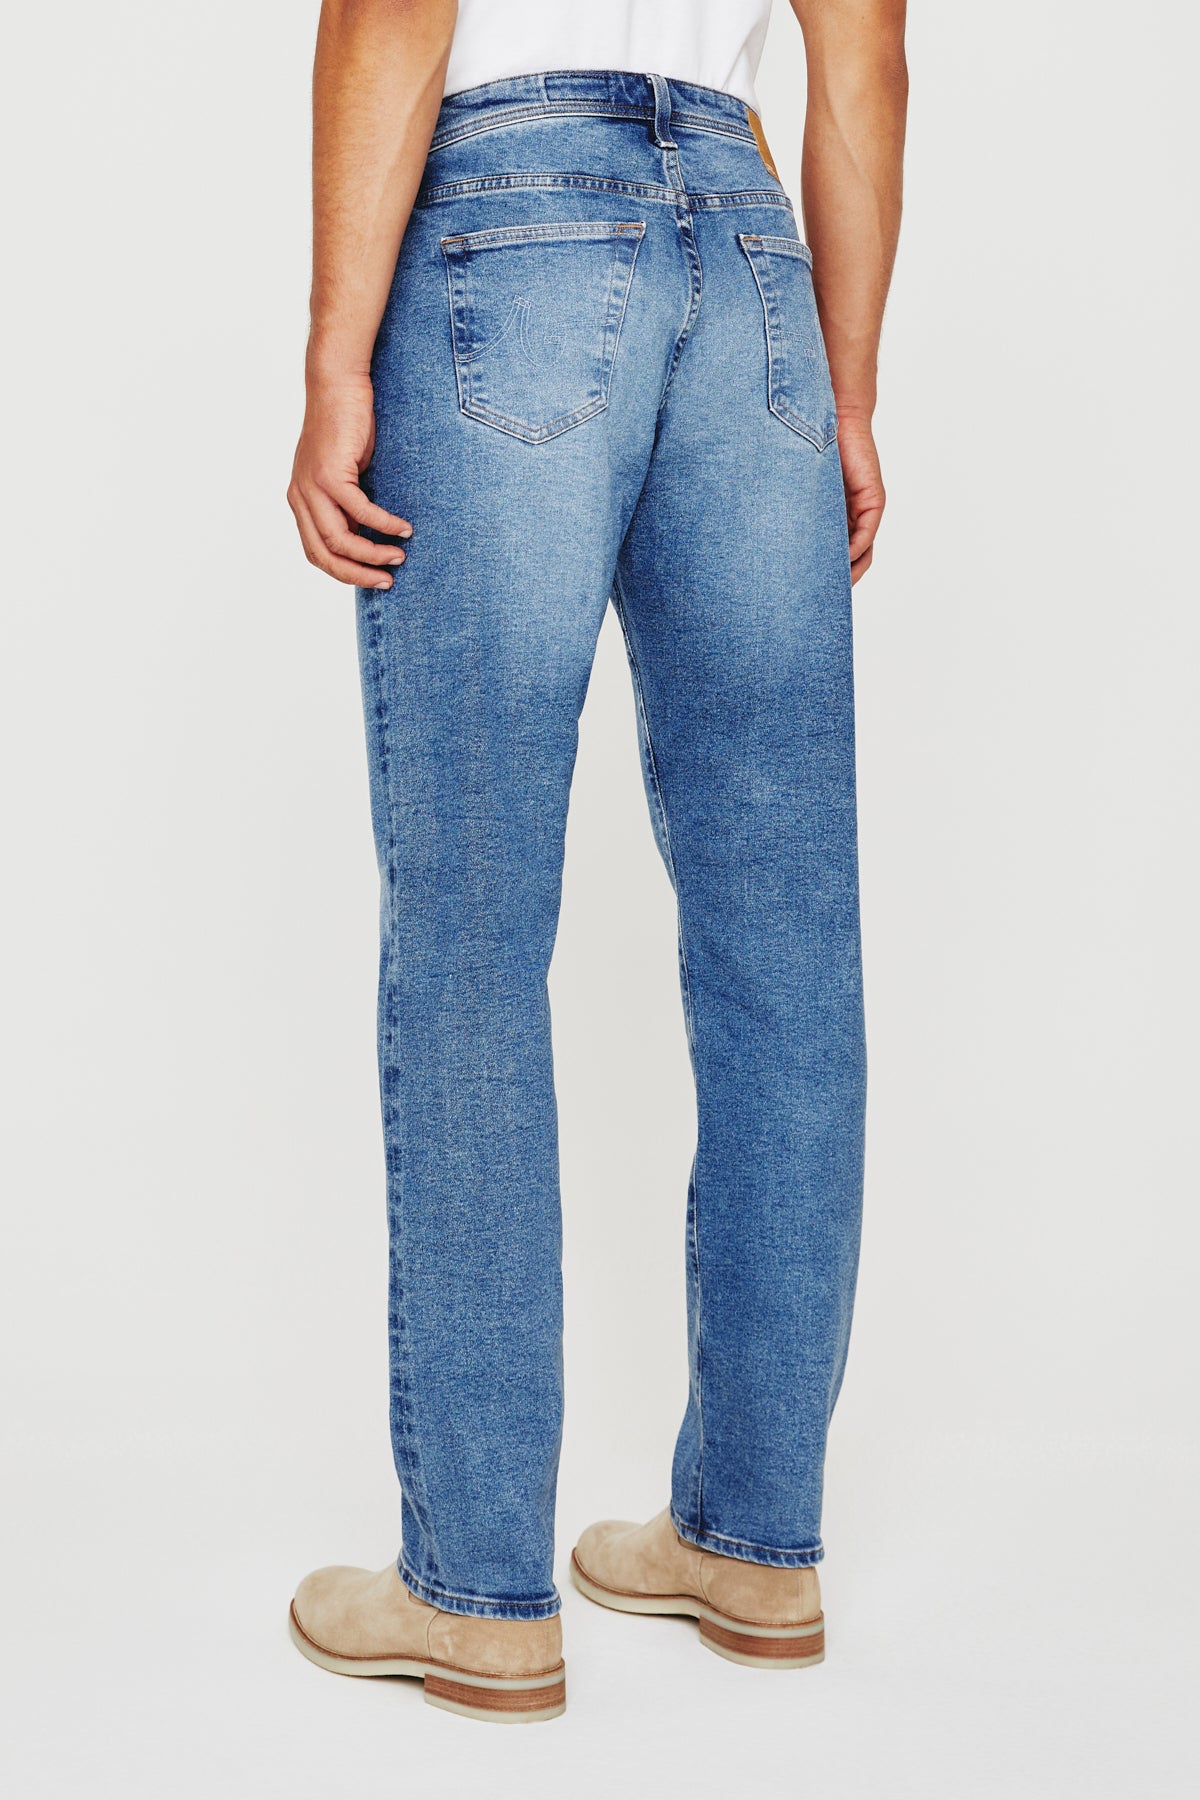 ag jeans dylan slim fit jean in vp la presa blue, rear view